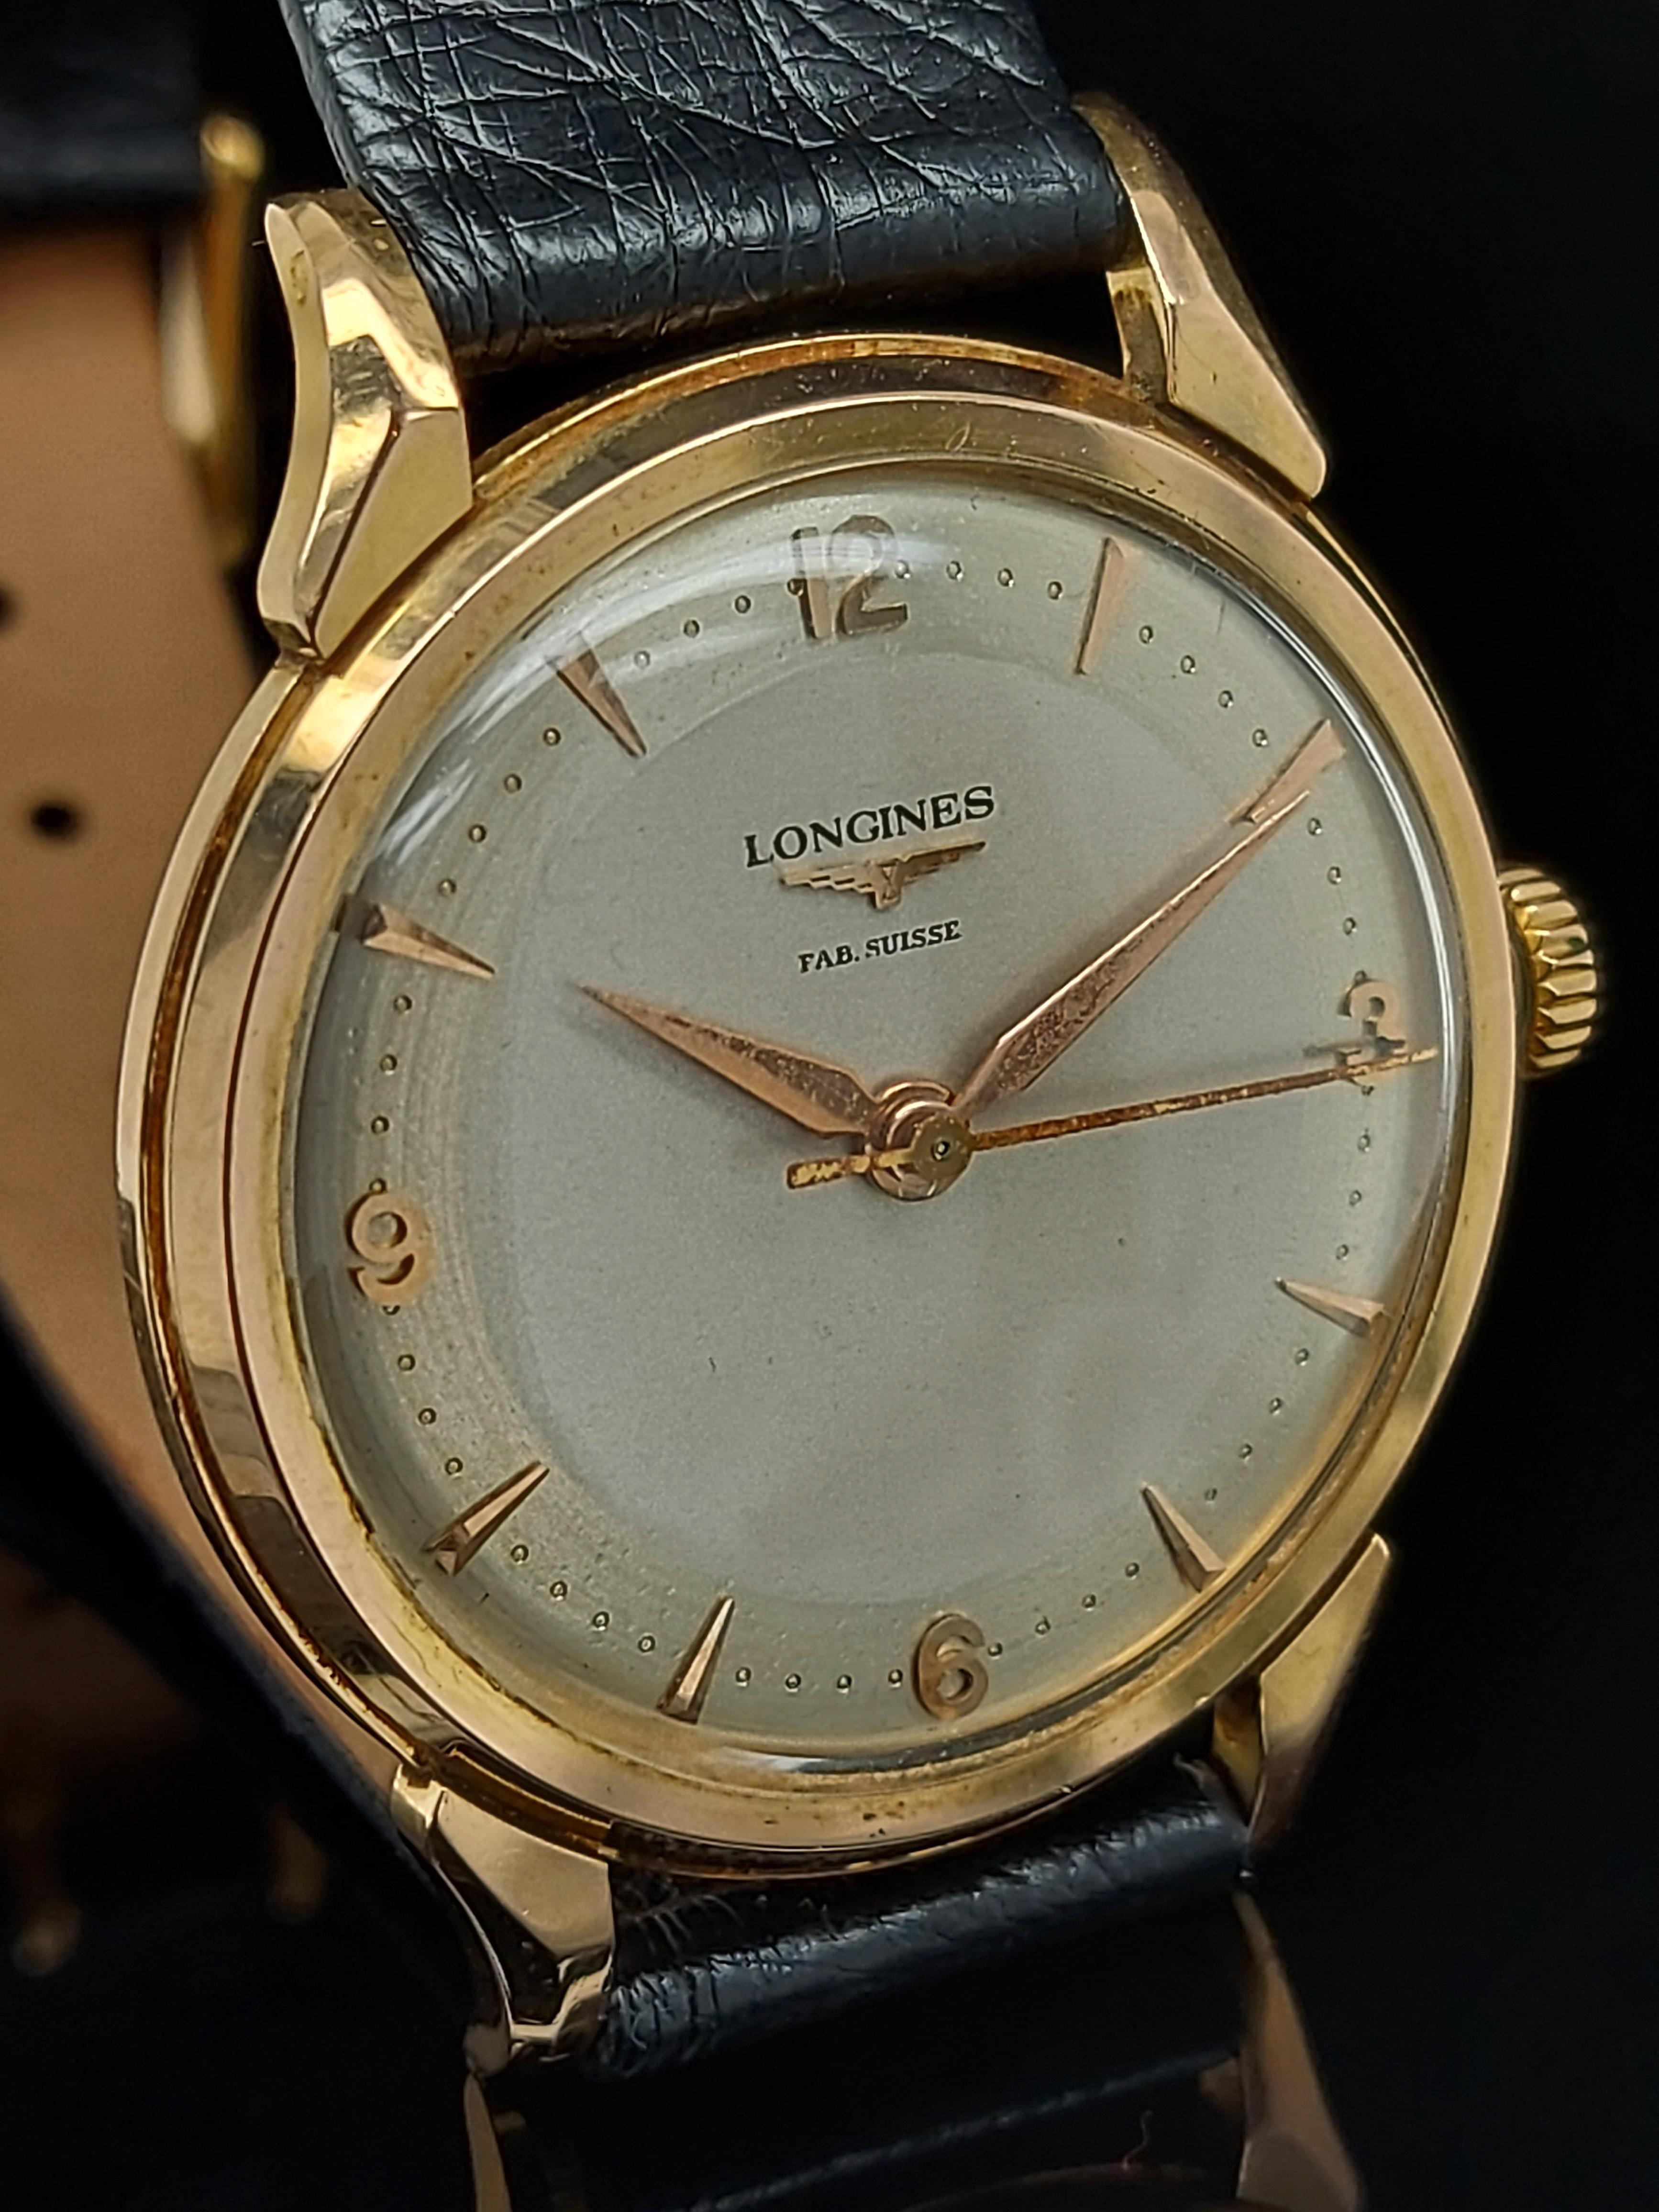 Longines Fab Suisse, 18 Karat Yellow Gold Case, Handwinding Wristwatch 6